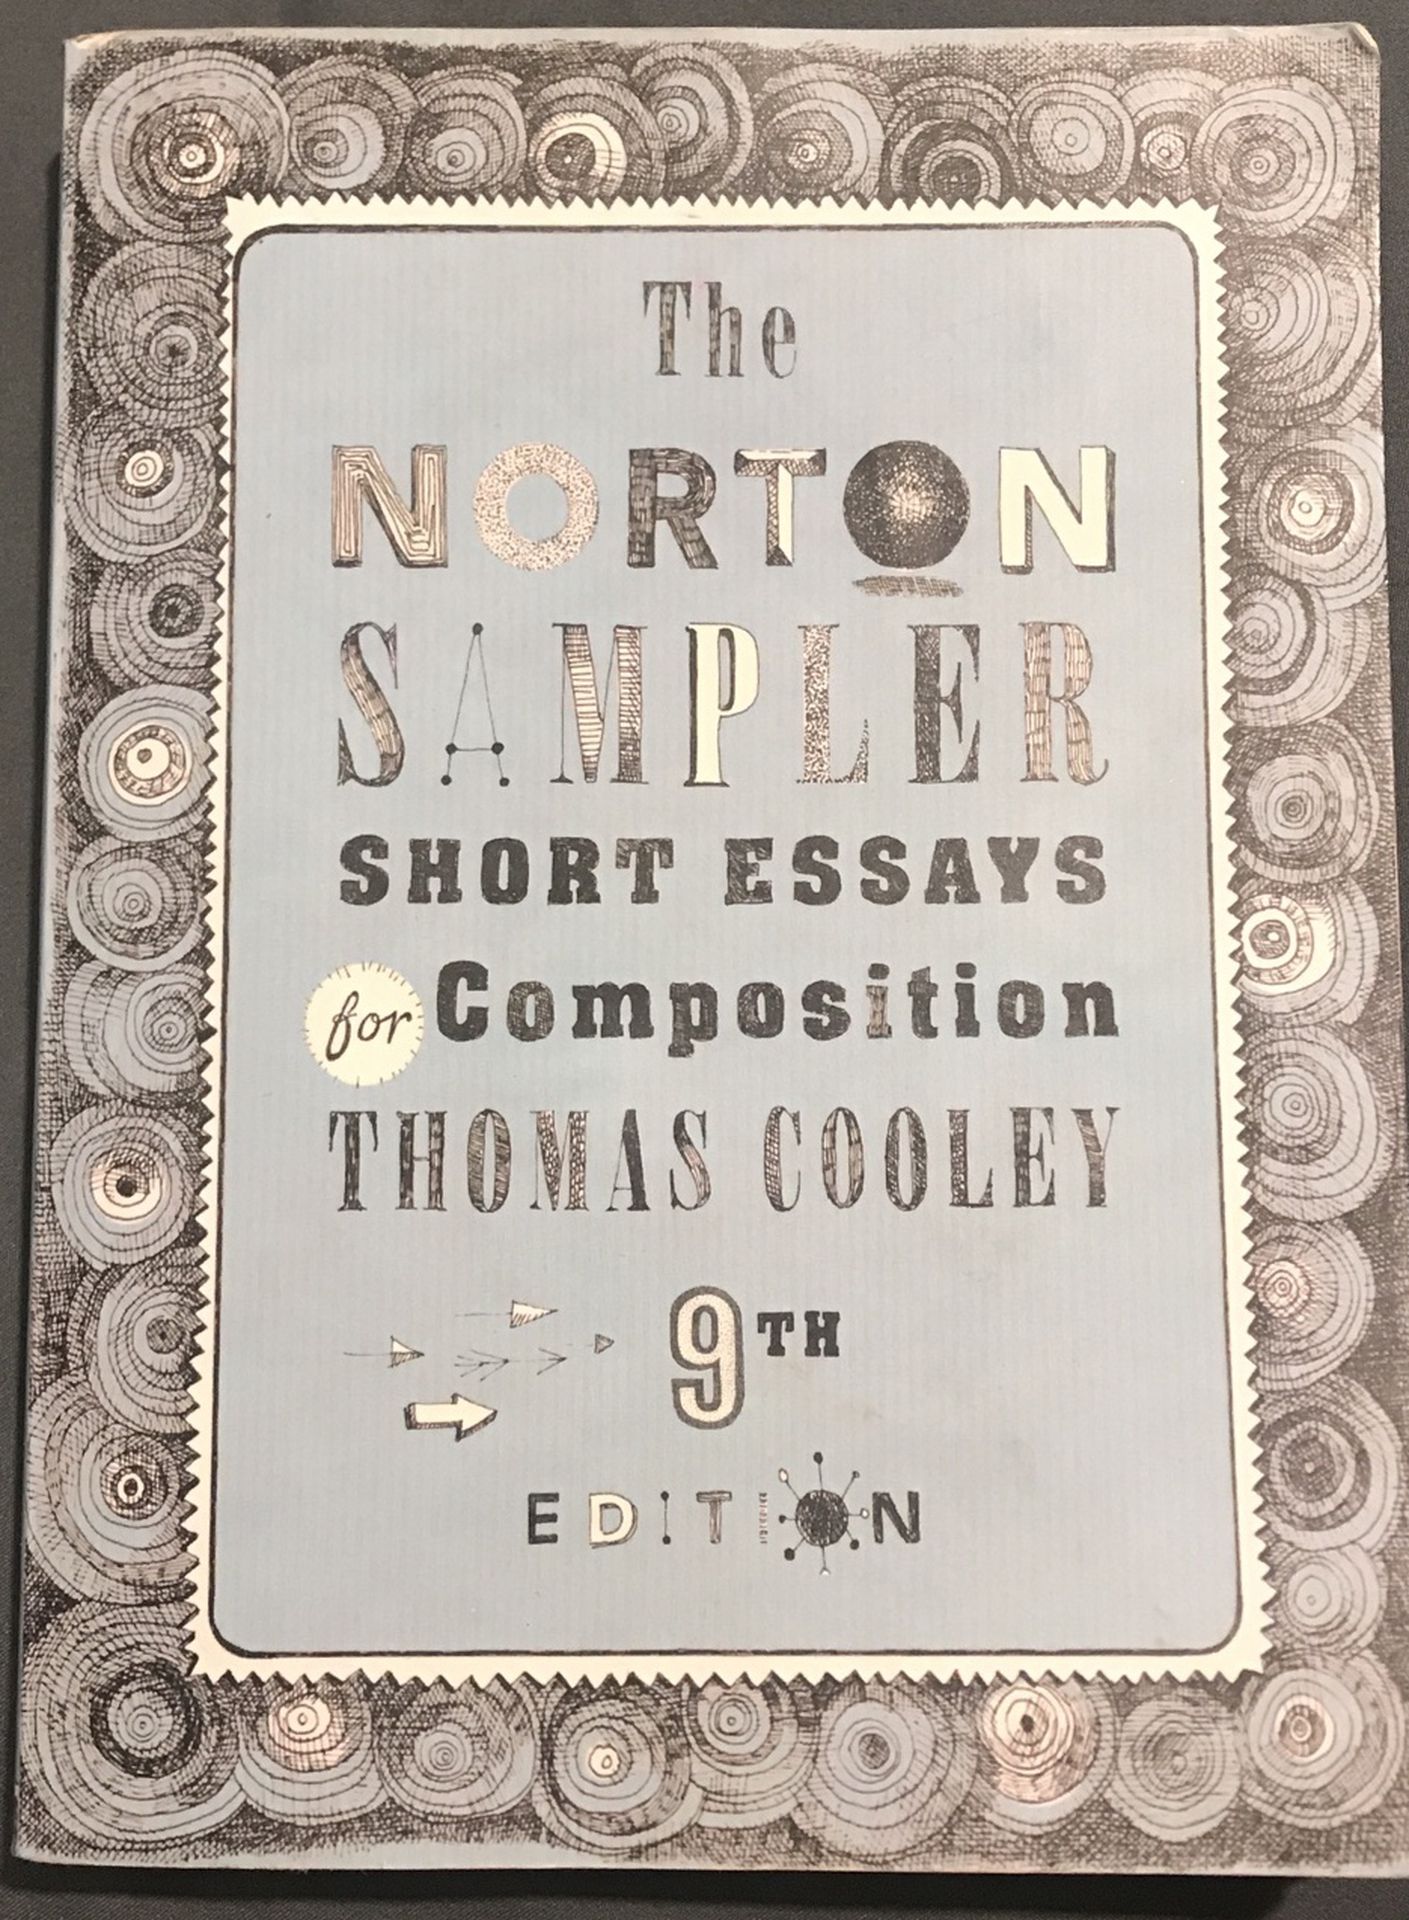 The Norton Sampler: Short Essays for Composition 9th Ed.